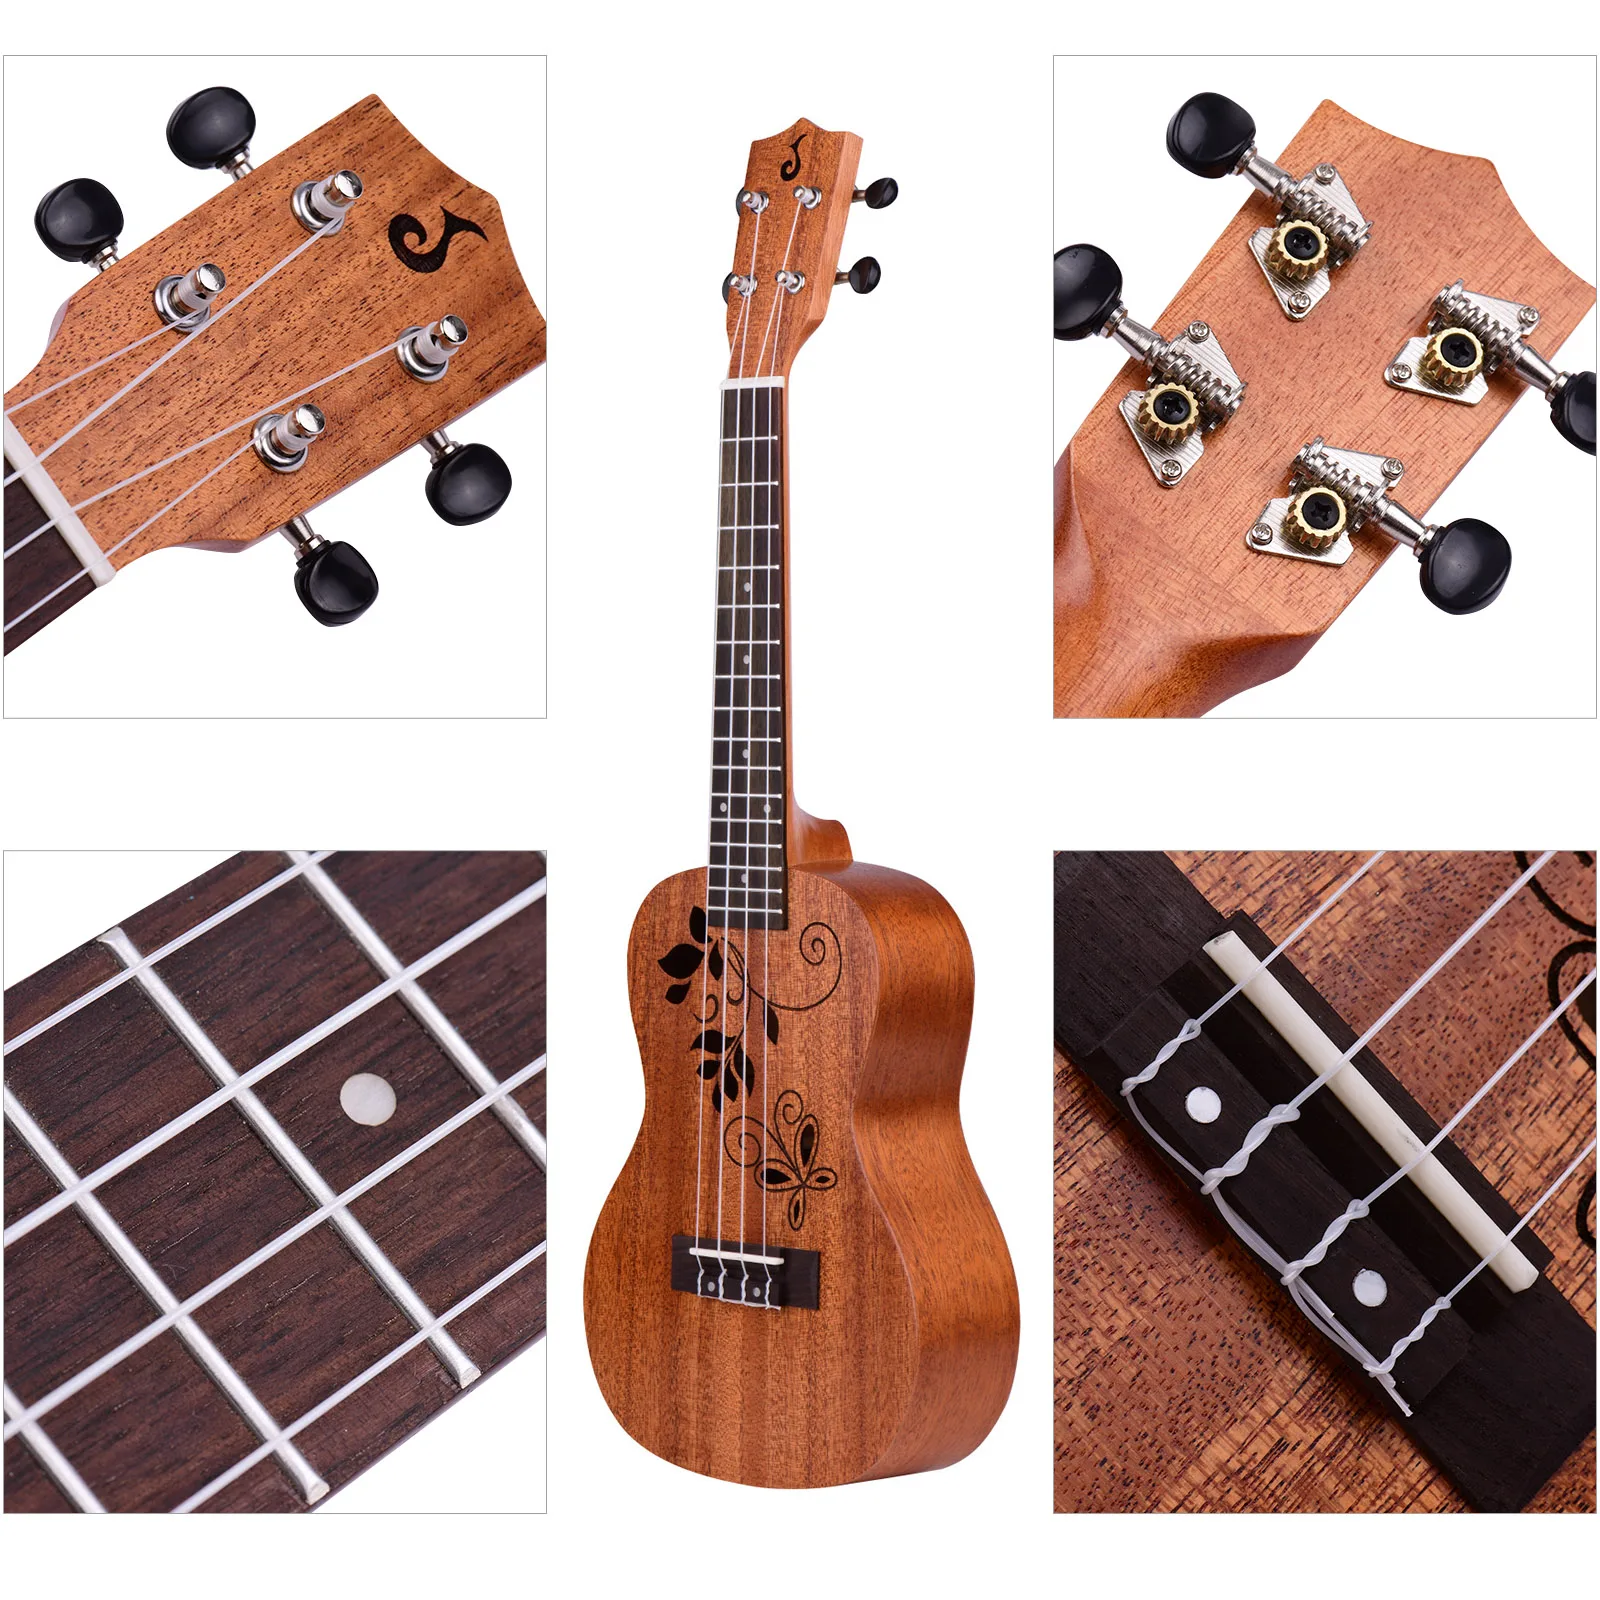 

Jaoques 23 Inch Concert Ukulele Kit 4 String Acoustic Beginner Hawai Ukelele Uke Wood Pattern Carved Top Engineered Wood